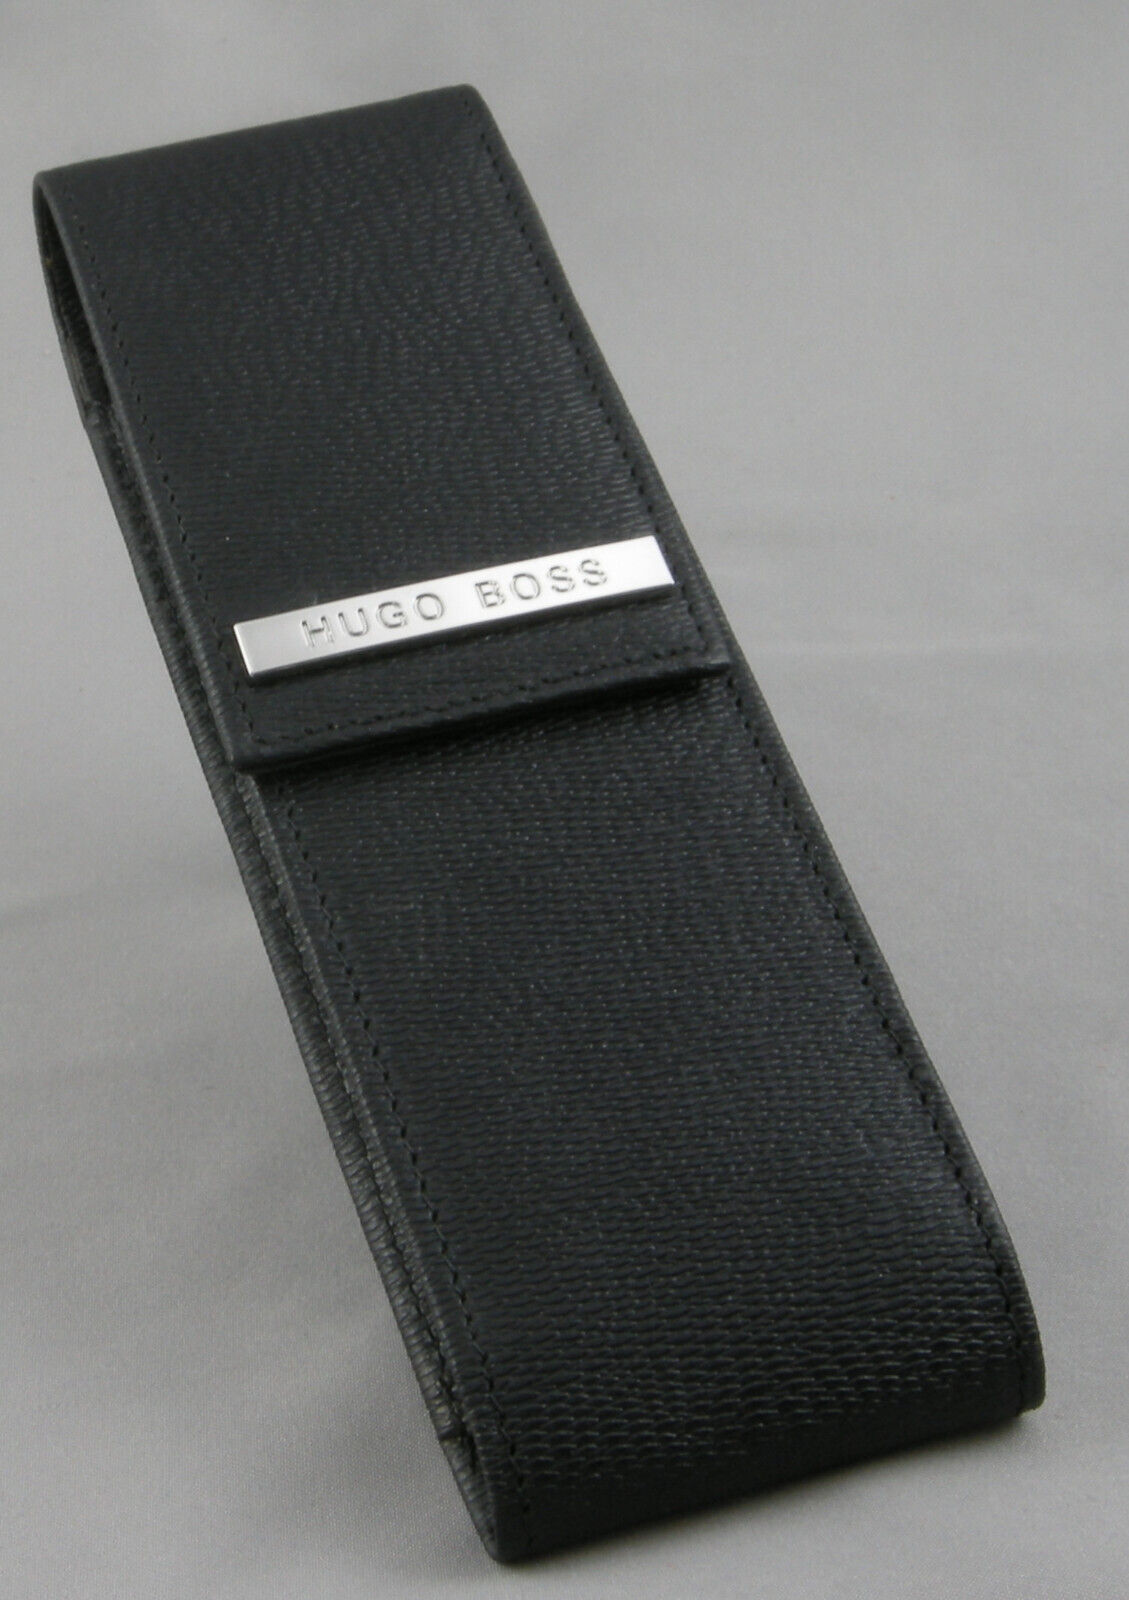 Hugo Boss Advance Black Leather 2-Pen Case - Brand New in Box